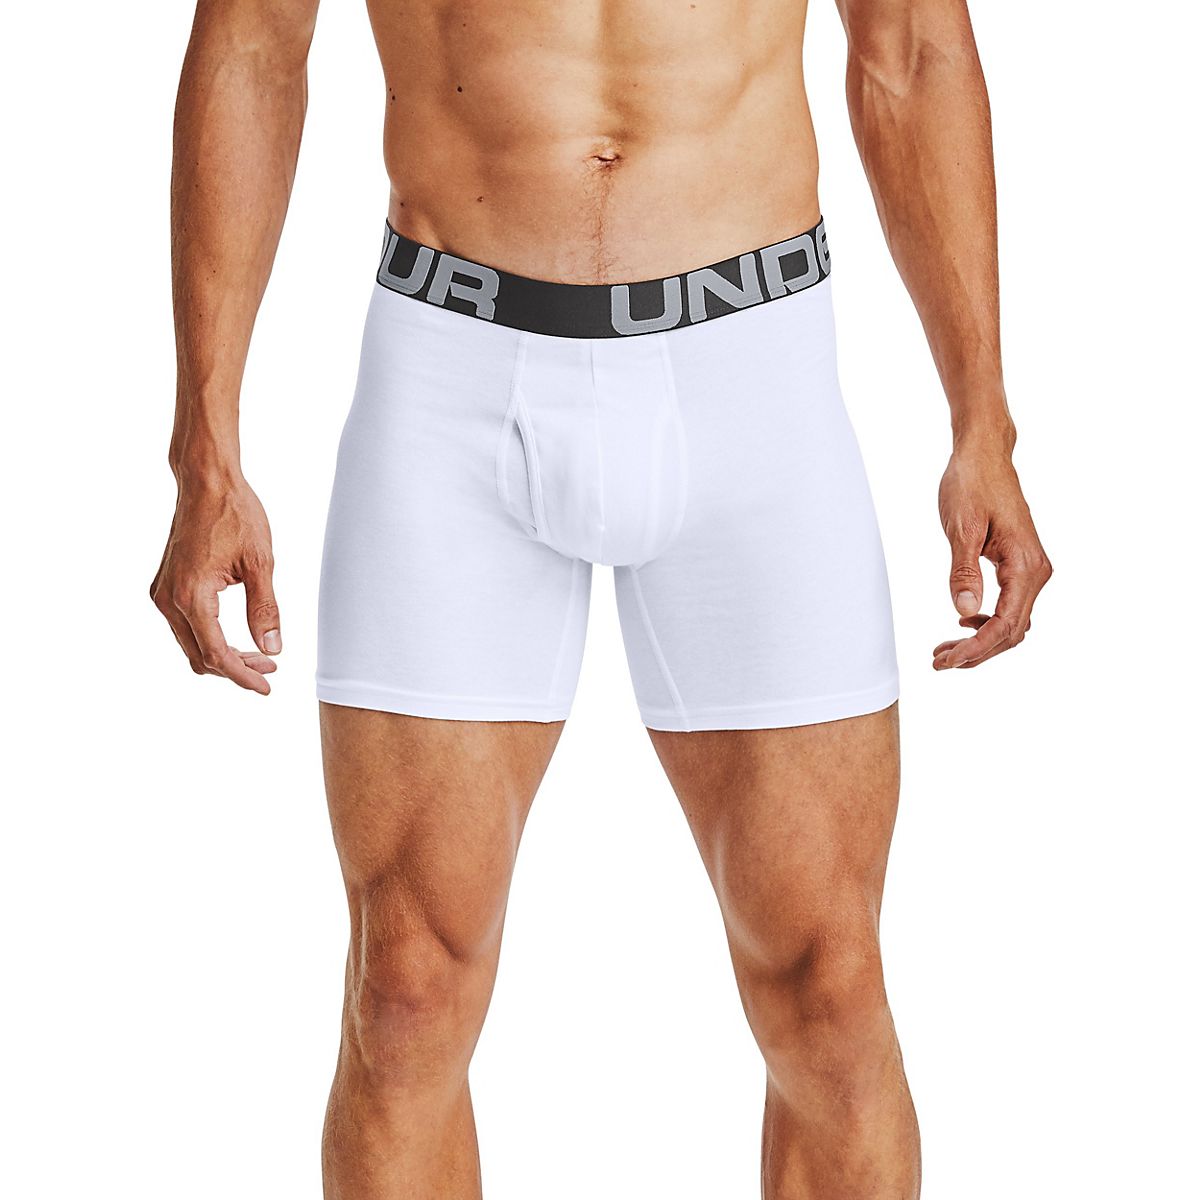 Klew Men's NBA Oklahoma City Thunder Wordmark Underwear 